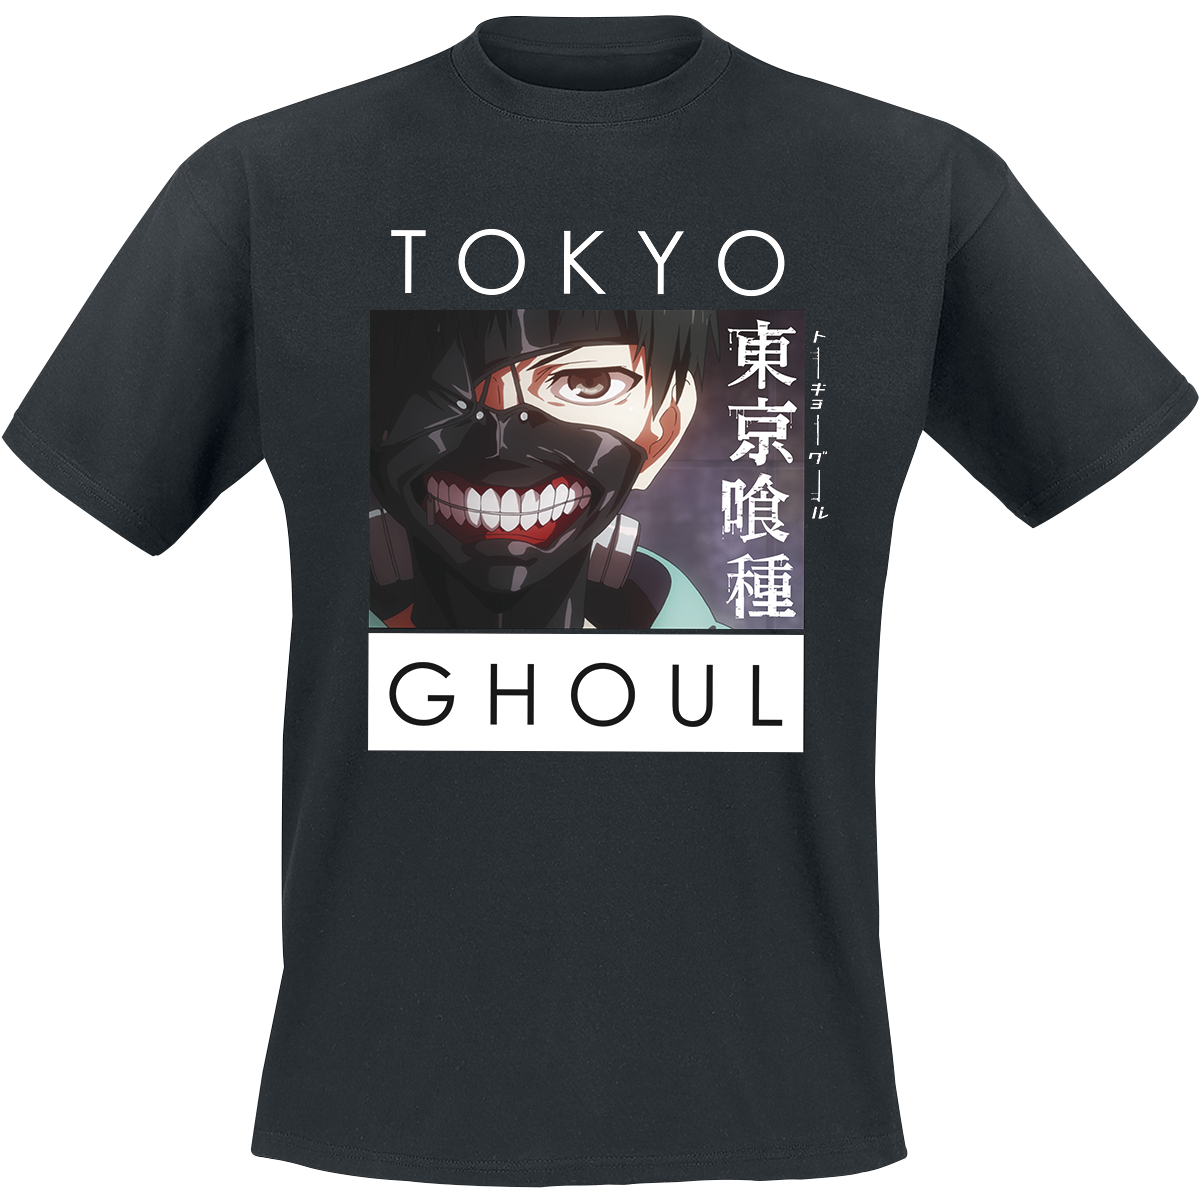 Tokyo Ghoul - Social Club - T-Shirt - schwarz